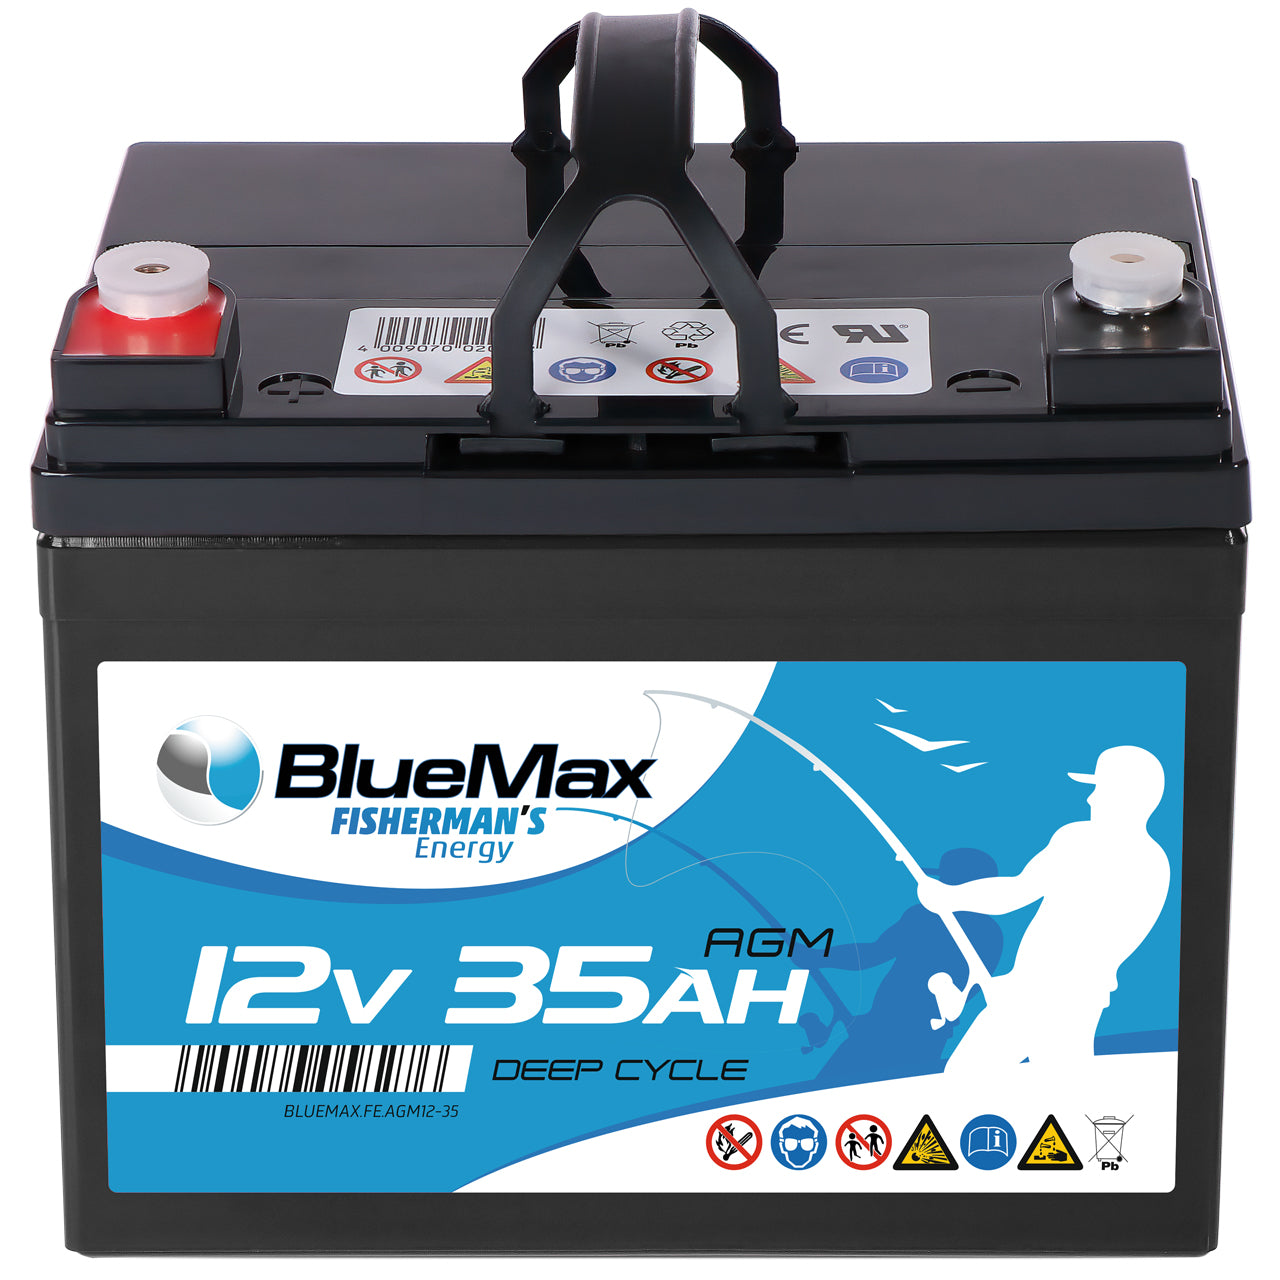 BLUEMAX Fisherman's Energy AGM 12V 35Ah Versorgerbatterie